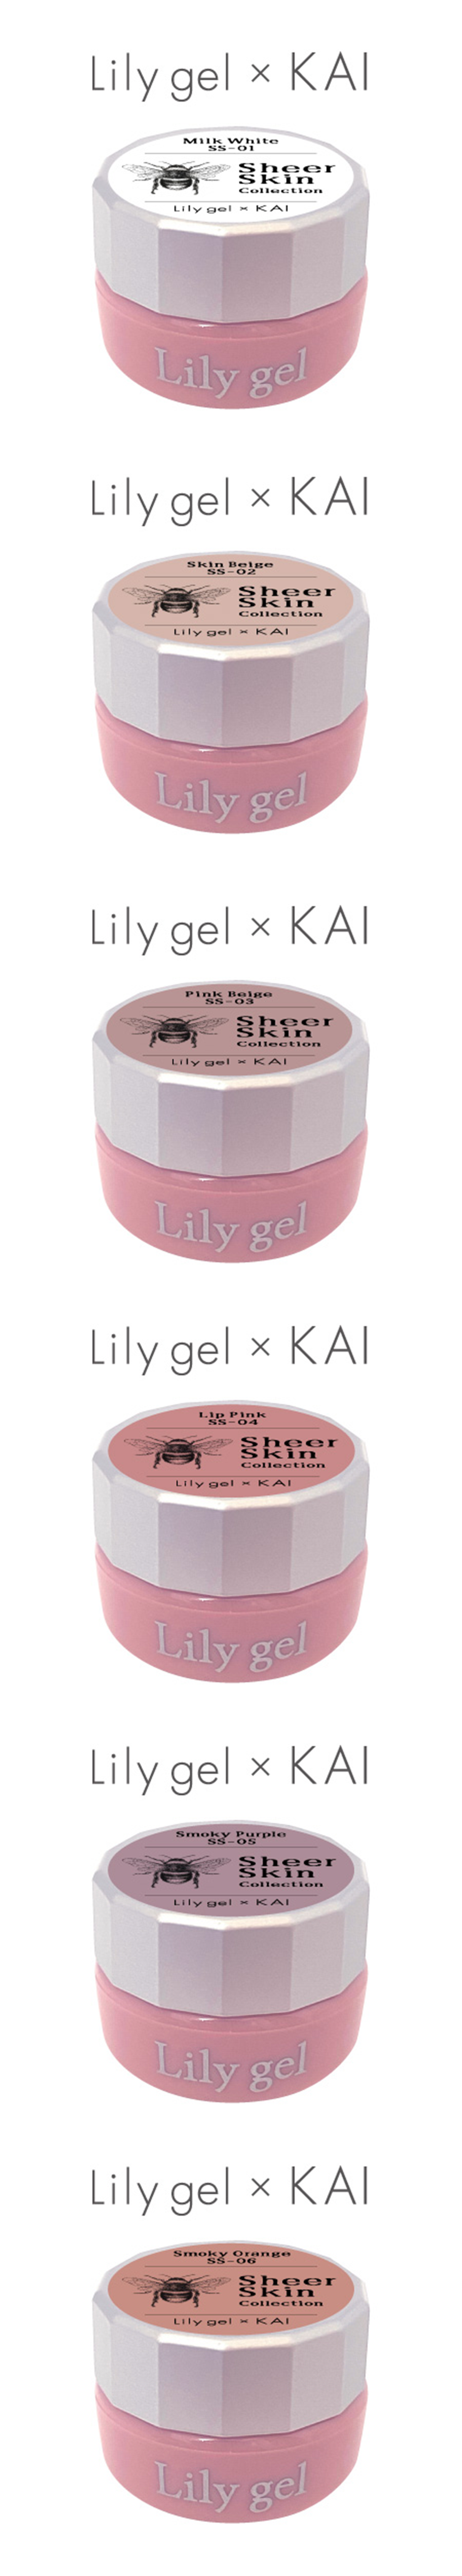 Lily Gel x Kai Sheer Skin Collection